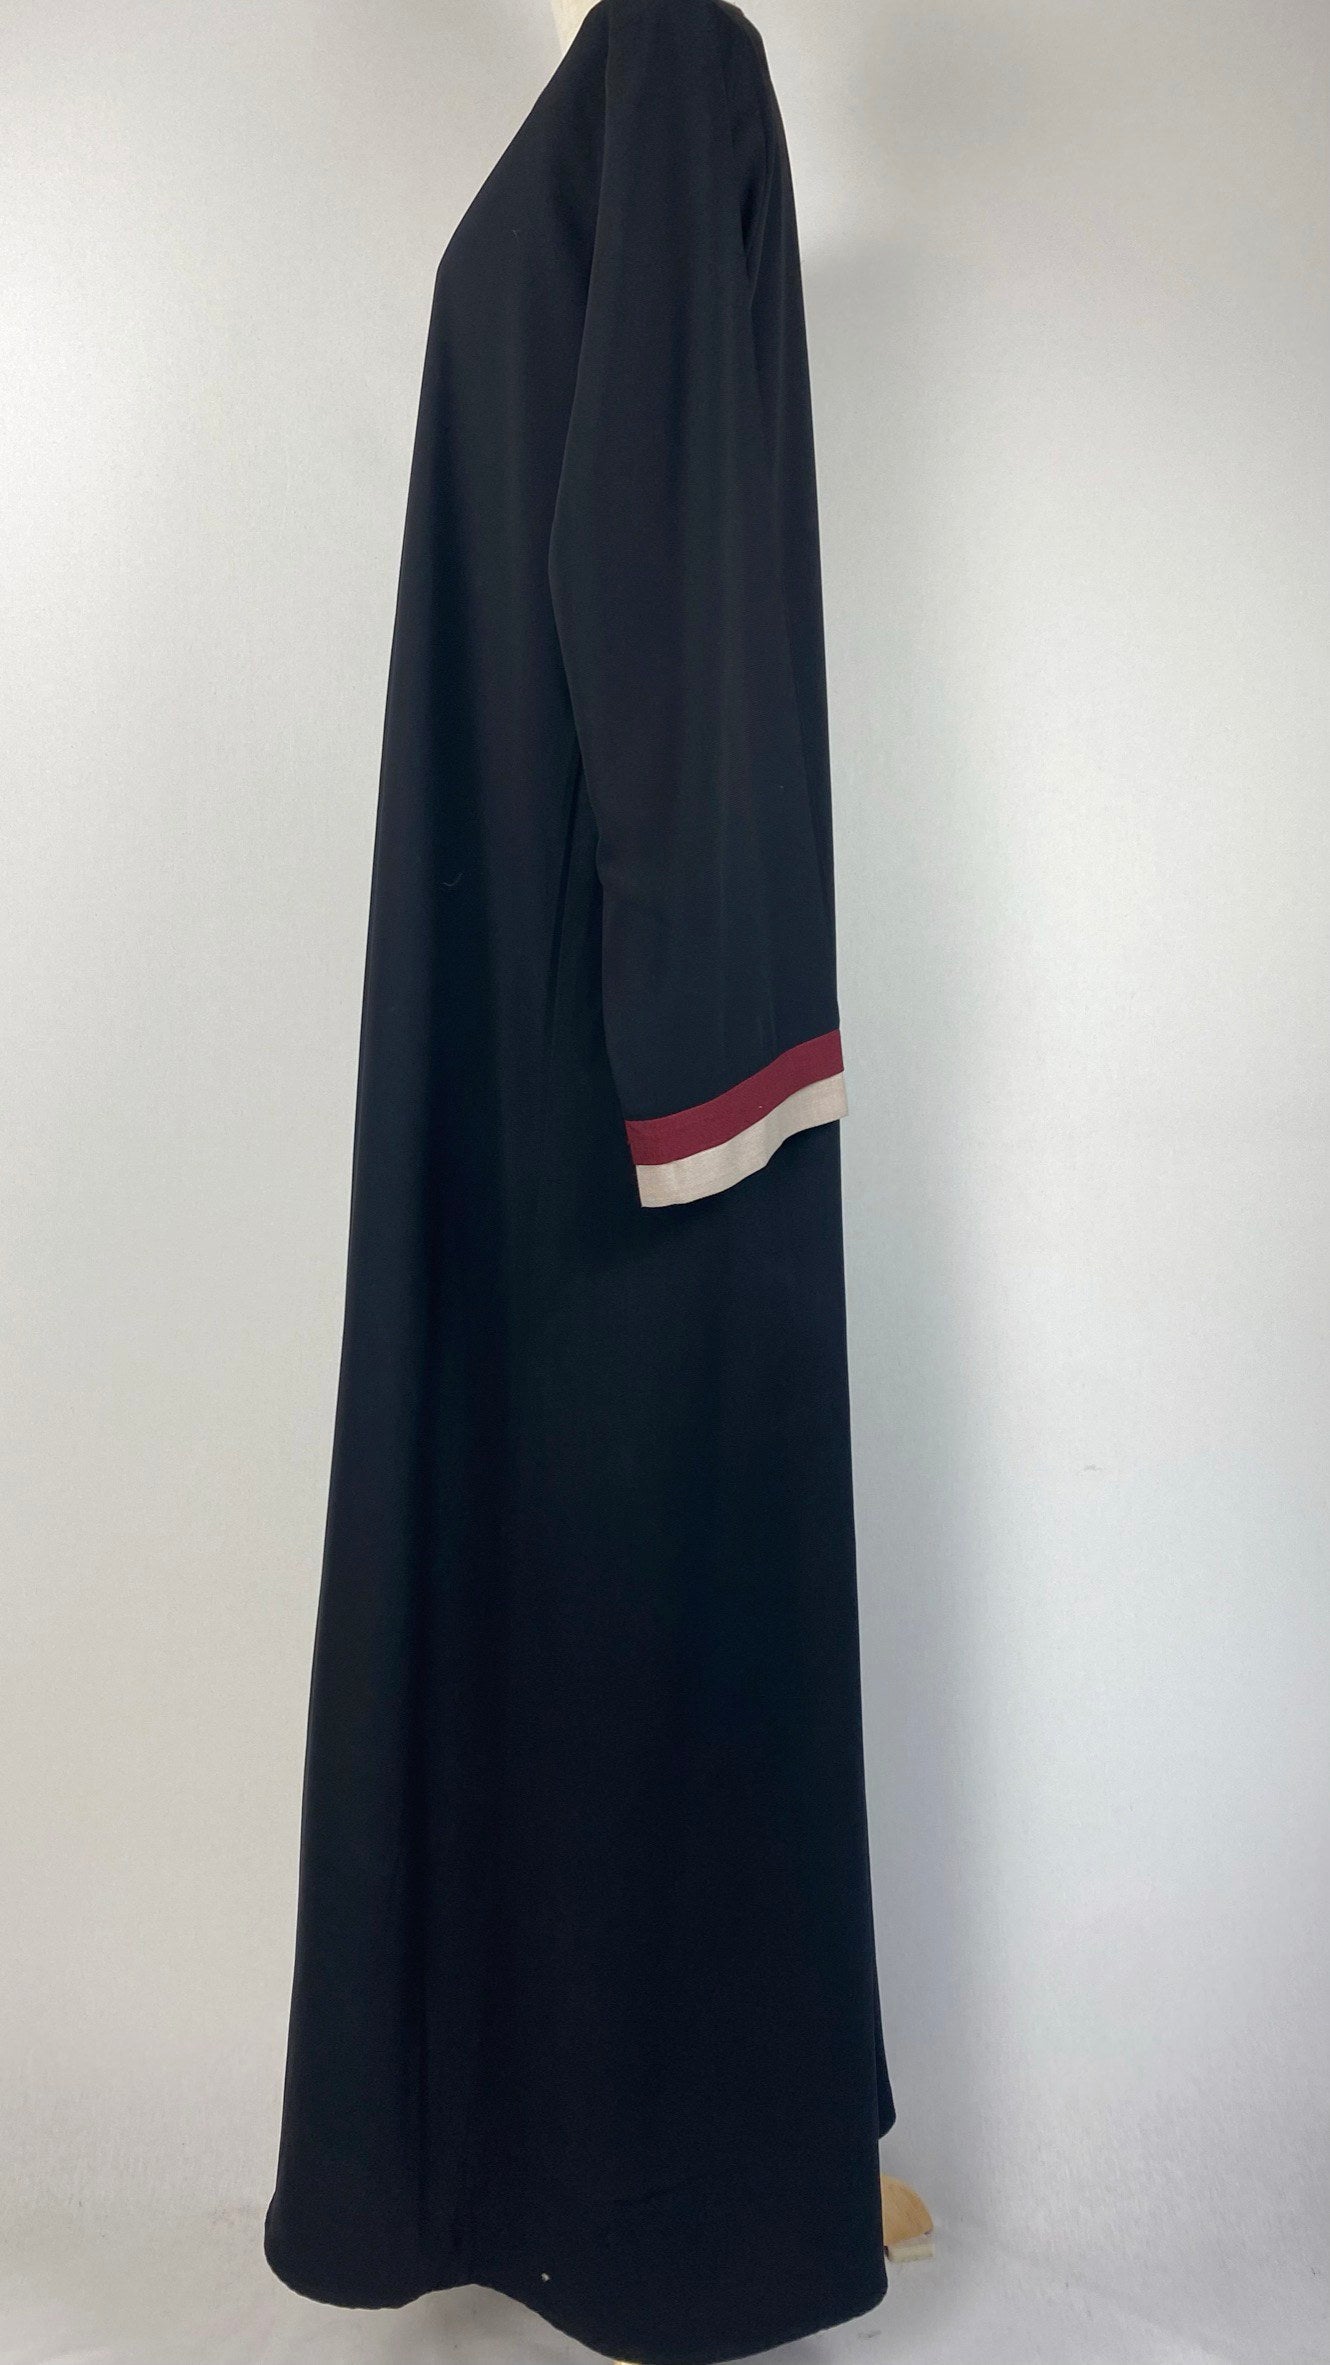 Long Sleeve Closed Abaya, Black